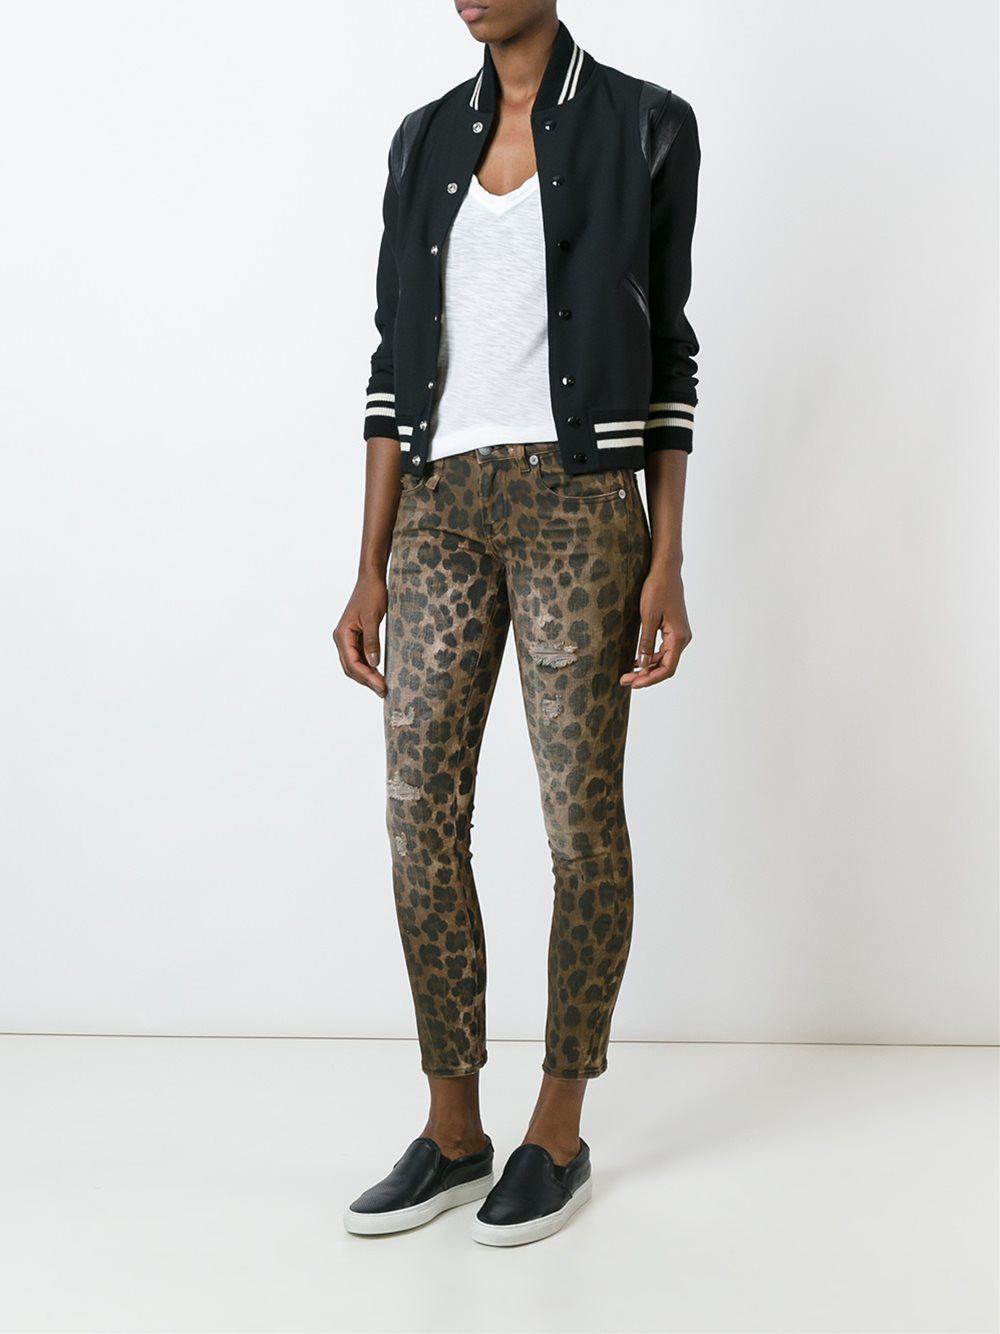 Lyst R13 Leopard Print Skinny Jeans In Brown